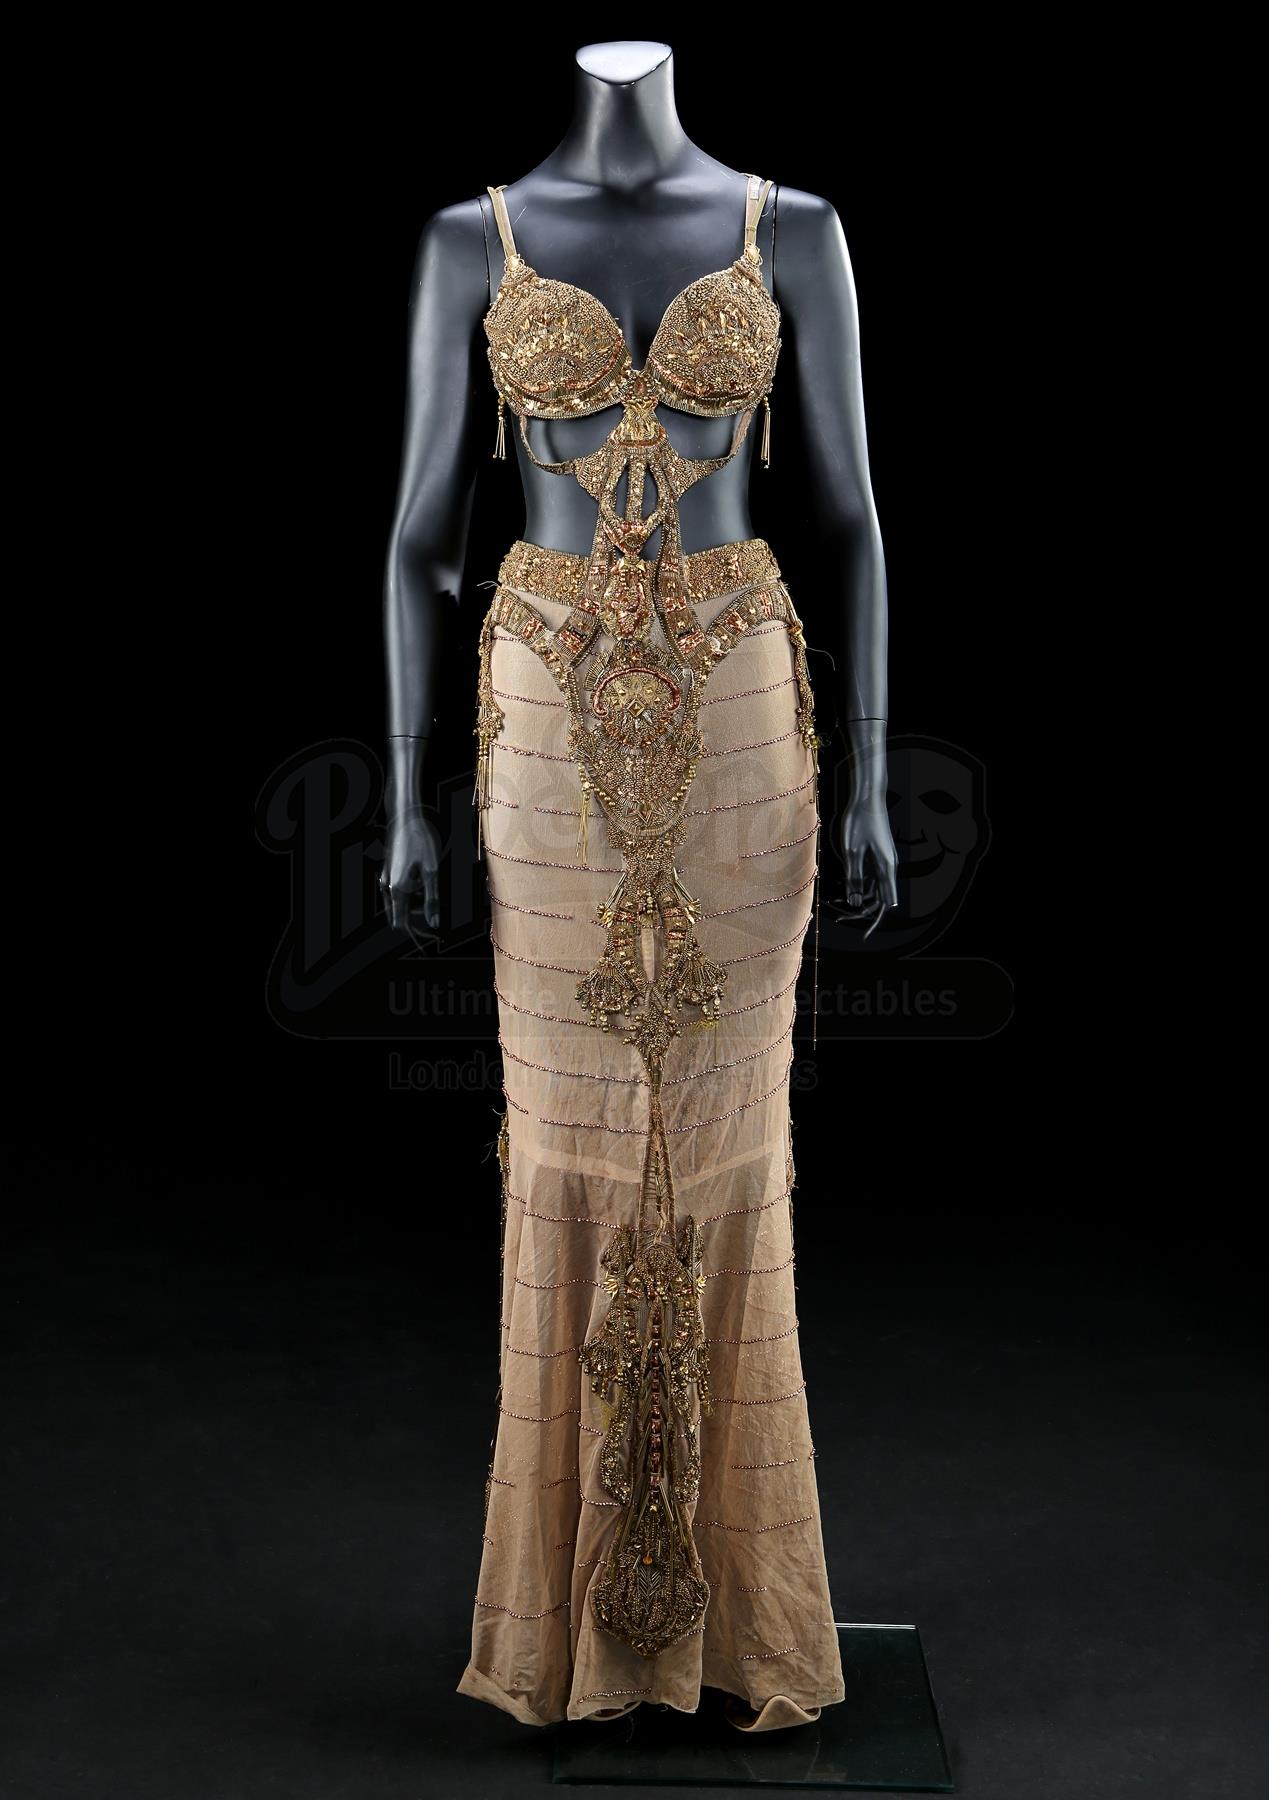 Hathor's Torn Dress - Current price: $600